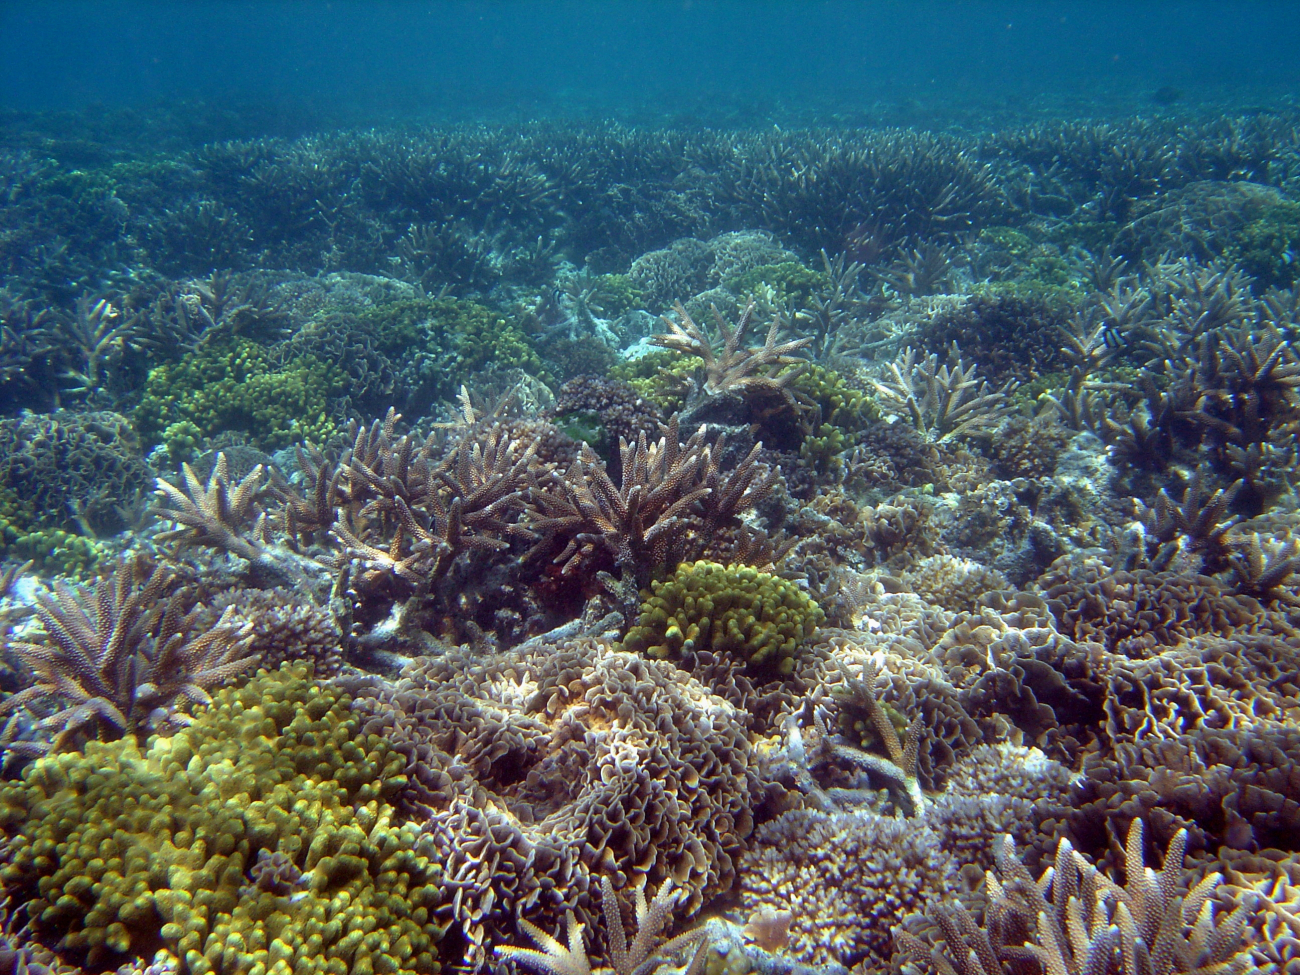 Diverse coral species populate reef scene